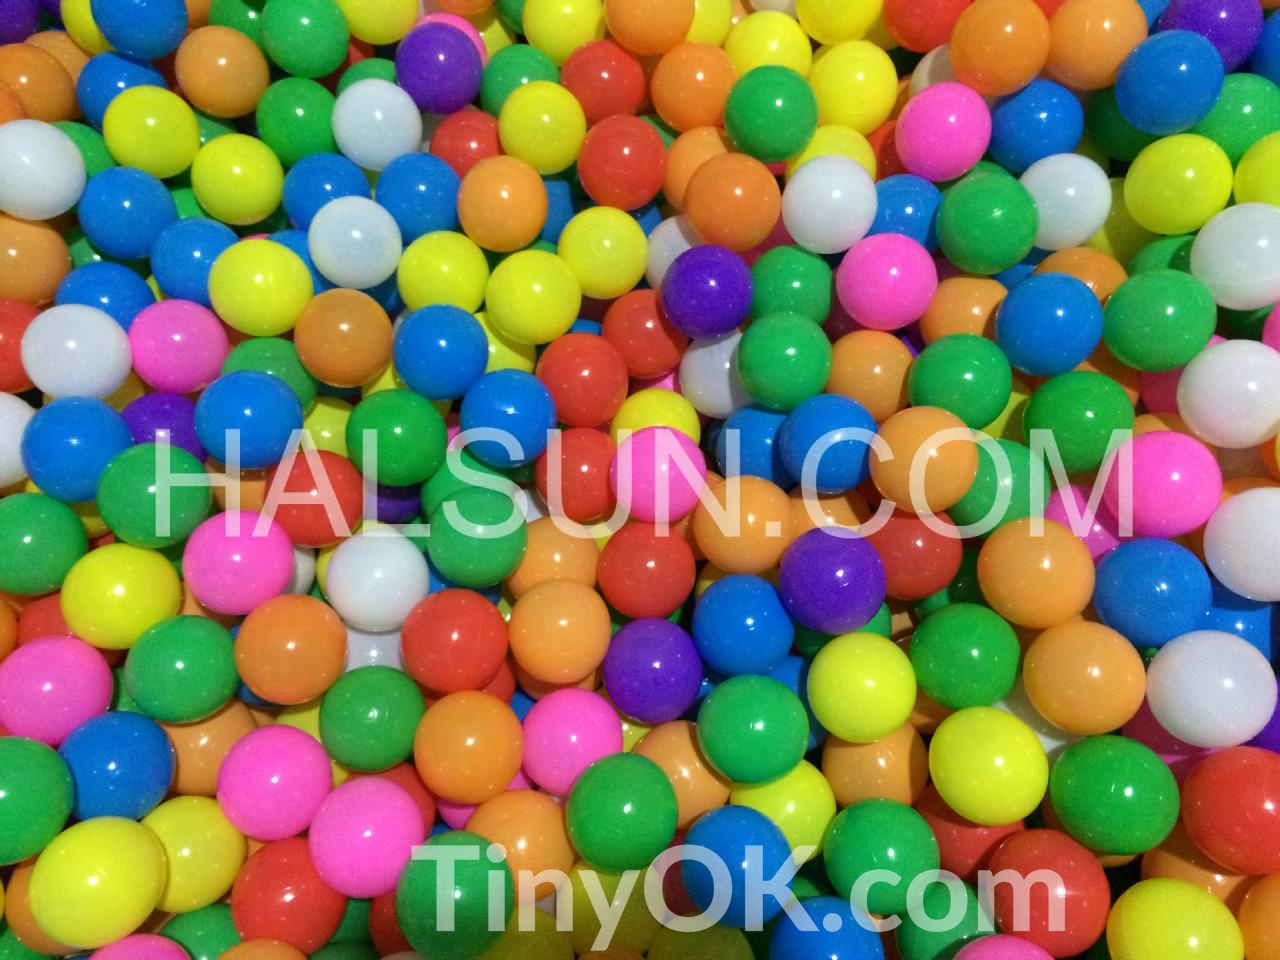 plastic-ocean-balls-8.jpg